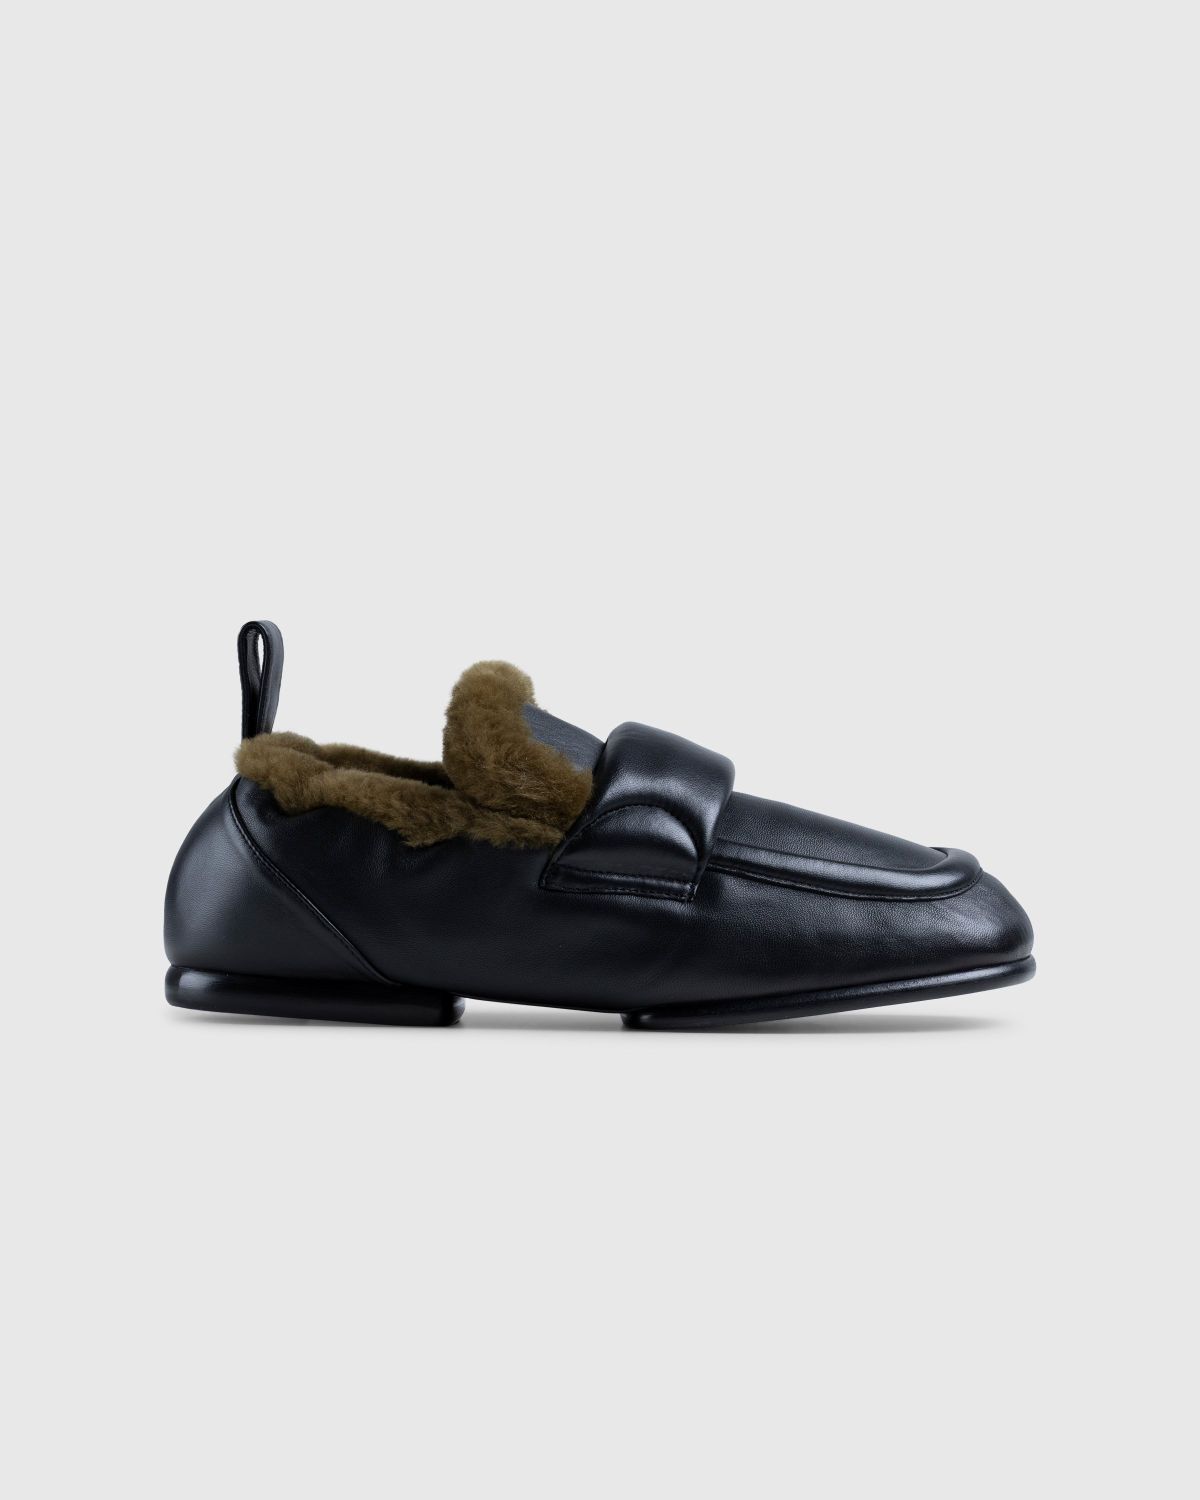 Dries van Noten – Padded Faux Fur Loafers Black - Sandals & Slides - Black - Image 1